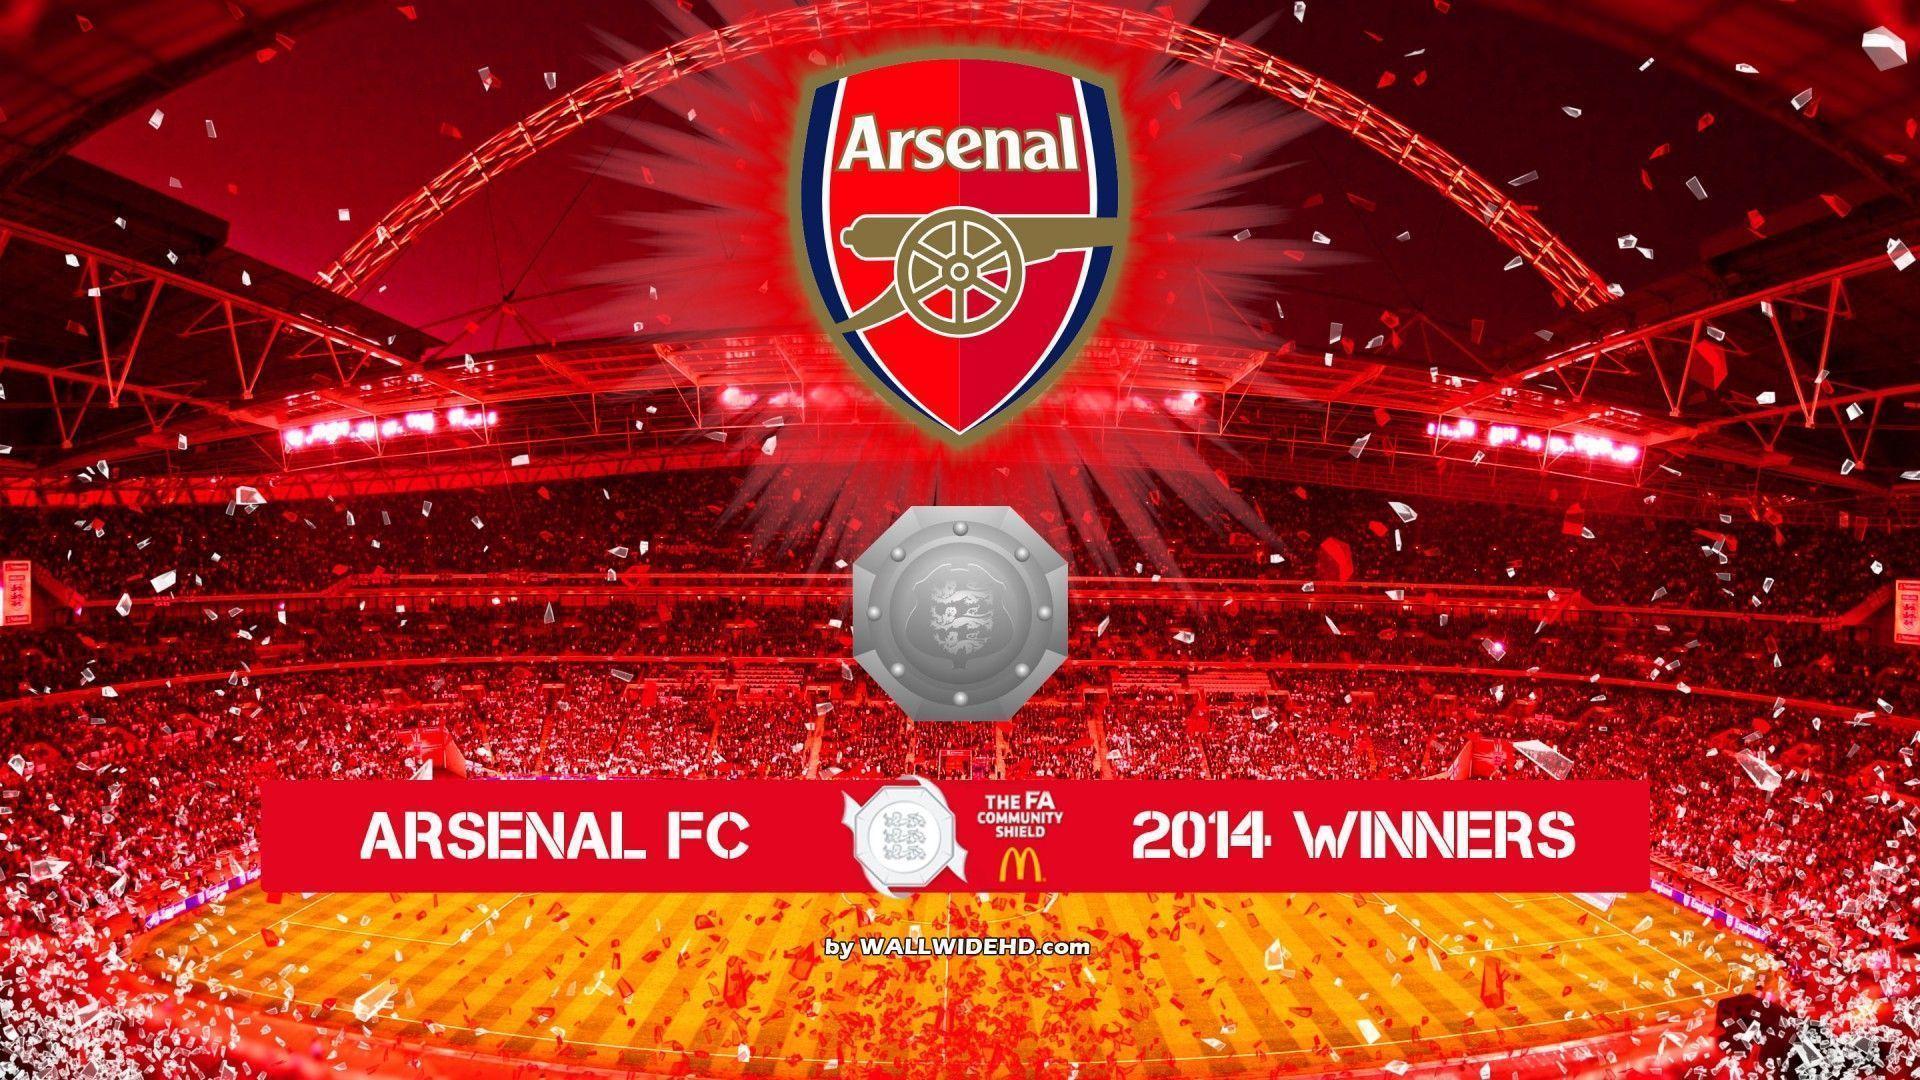 Arsenal FC vs Manchester City FC 2014 FA Community Shield